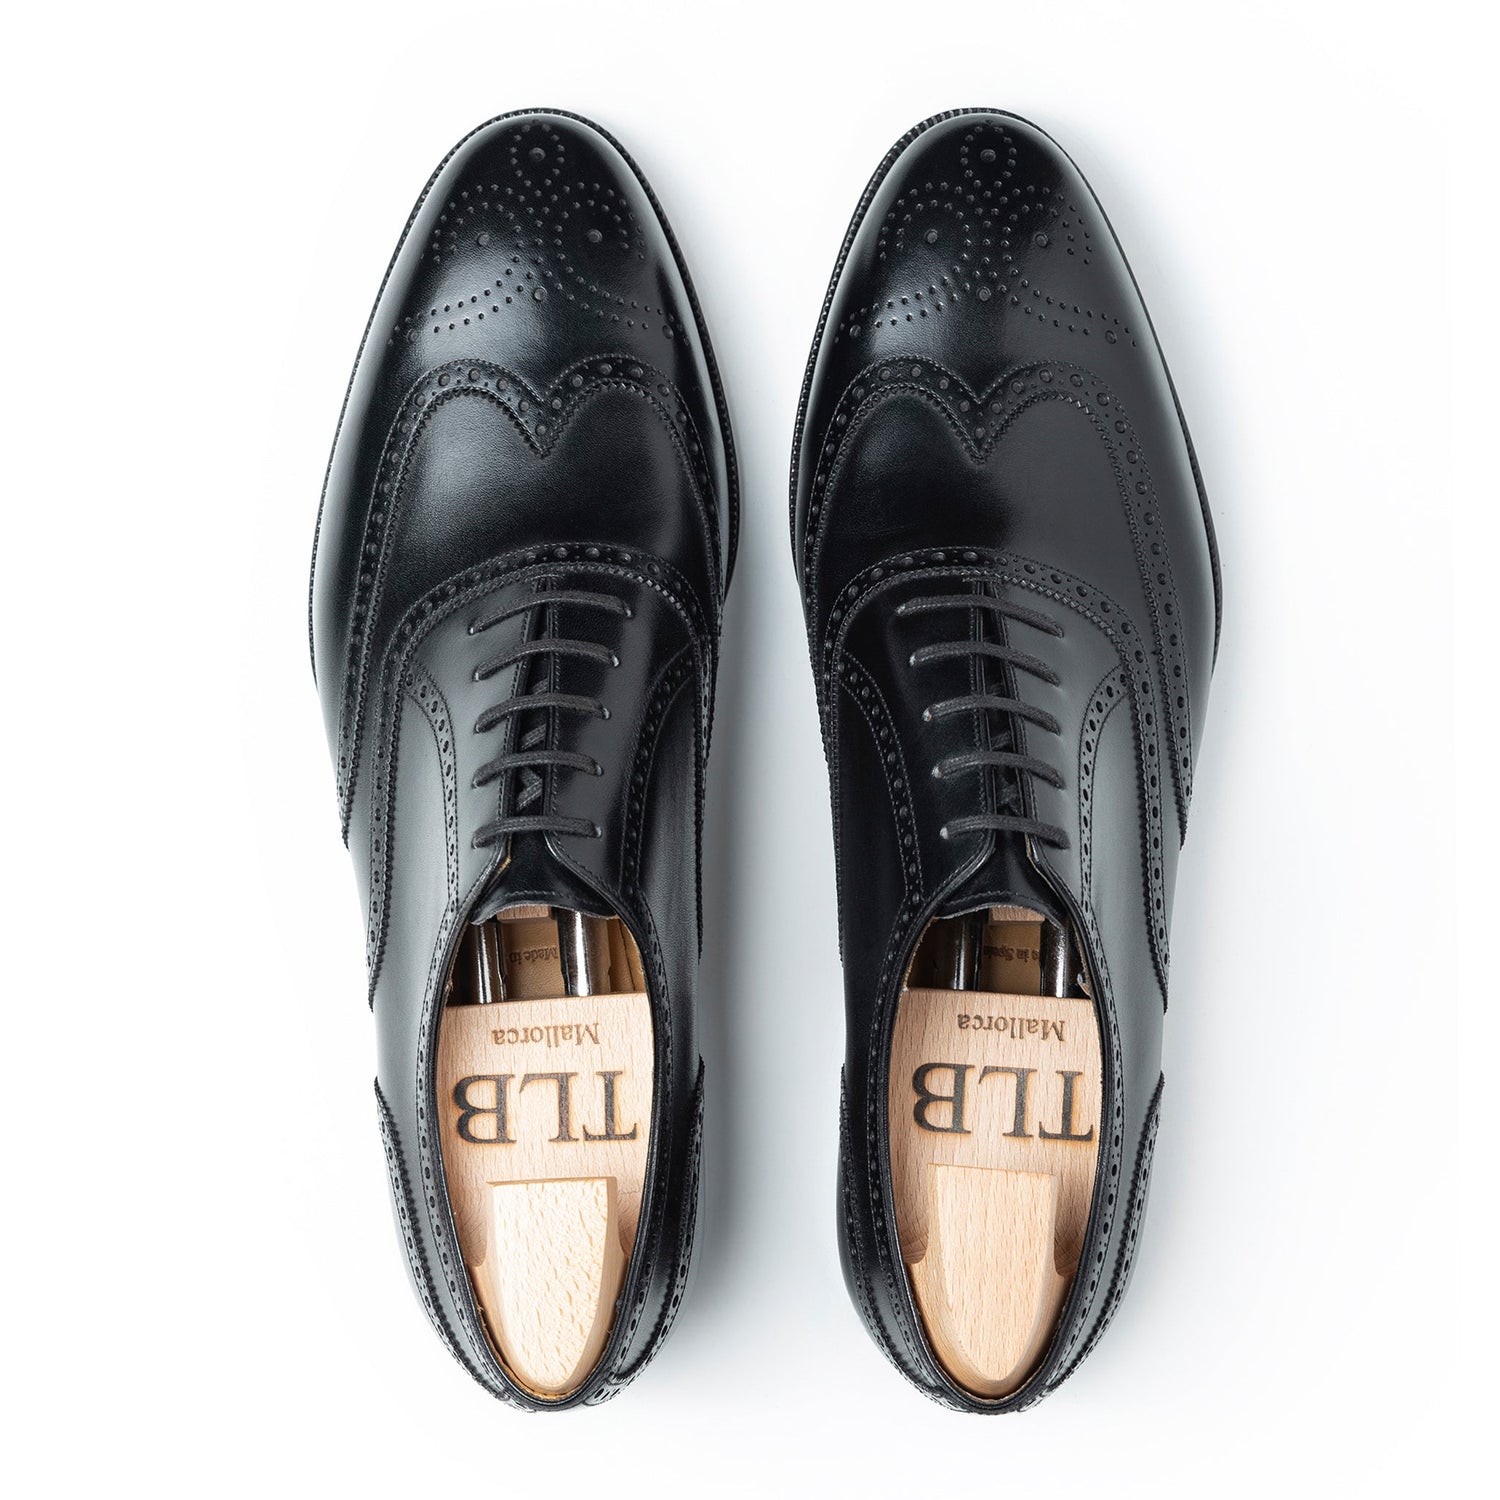 TLB Mallorca leather shoes - Men's wingtip shoes 